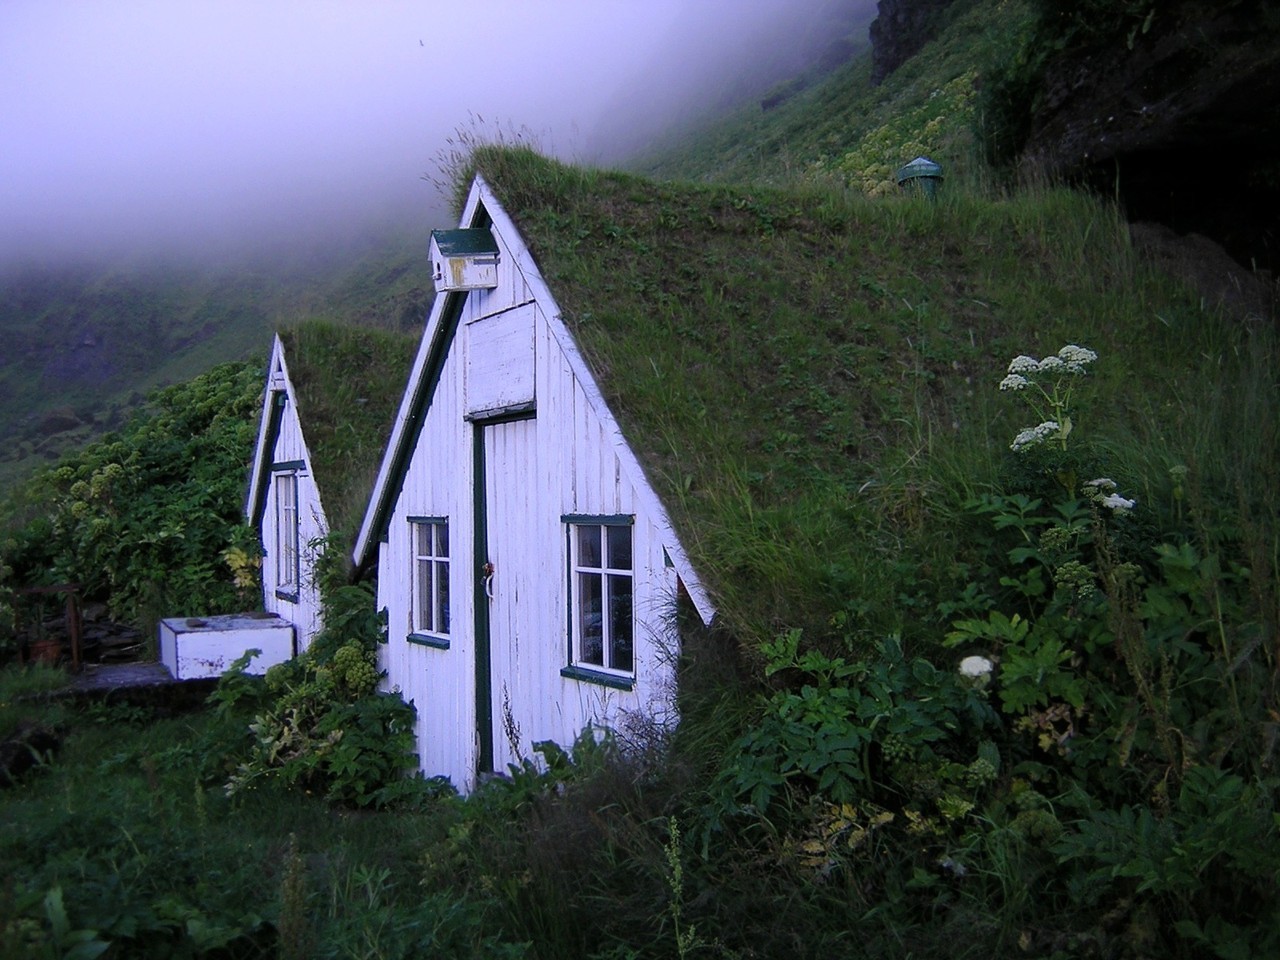  Sod roof houses in Vik, Iceland 